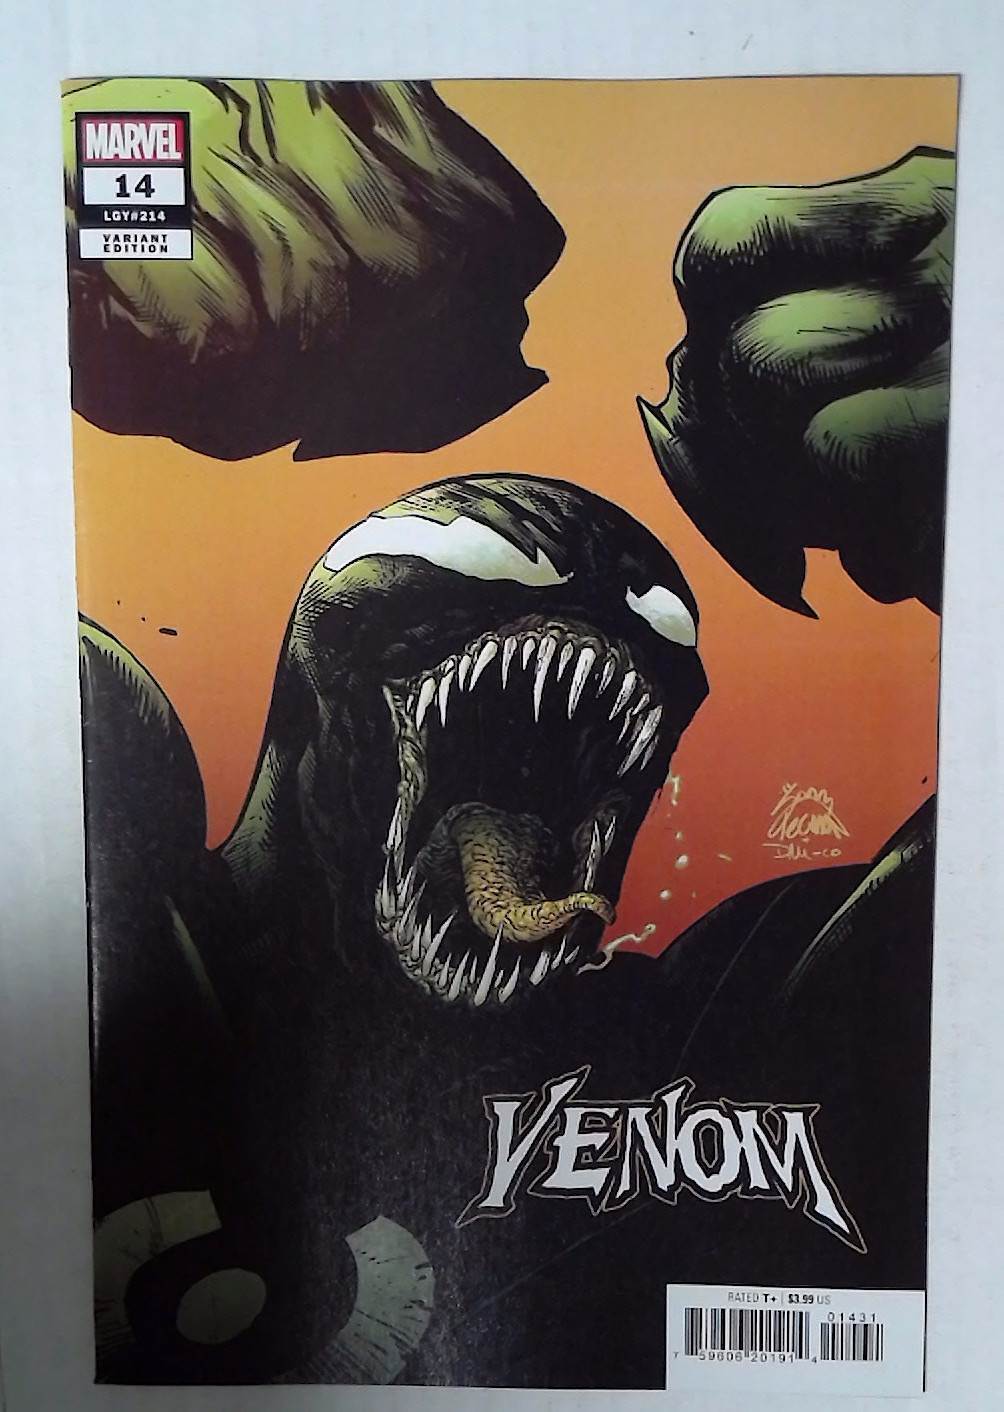 2023 Venom #14 c Marvel Limited 1:25 Incentive Cover Comic Book